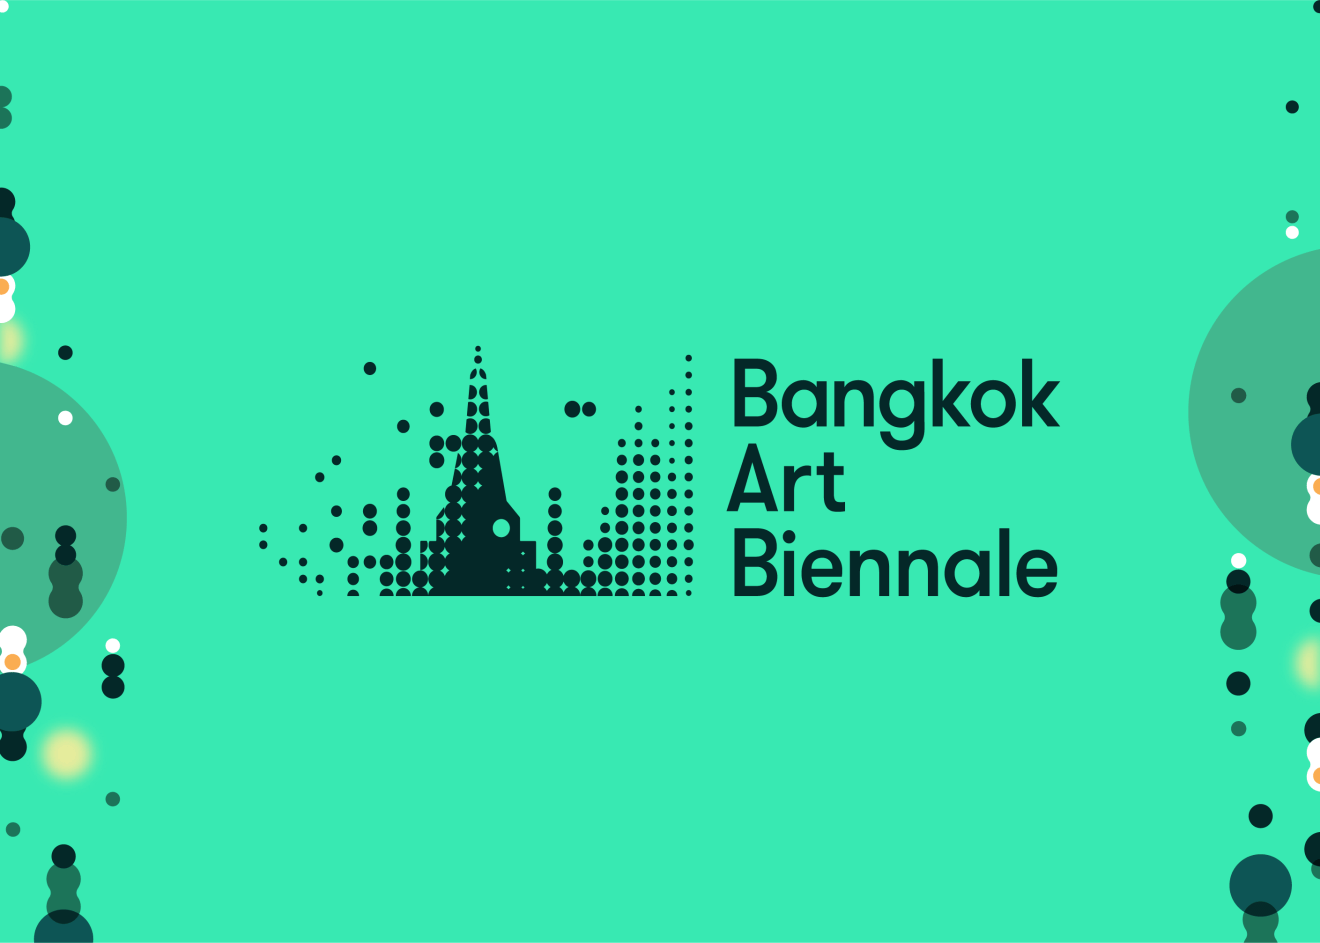 Marina Abramović and Leandro Erlich in Bangkok Art Biennale 2020